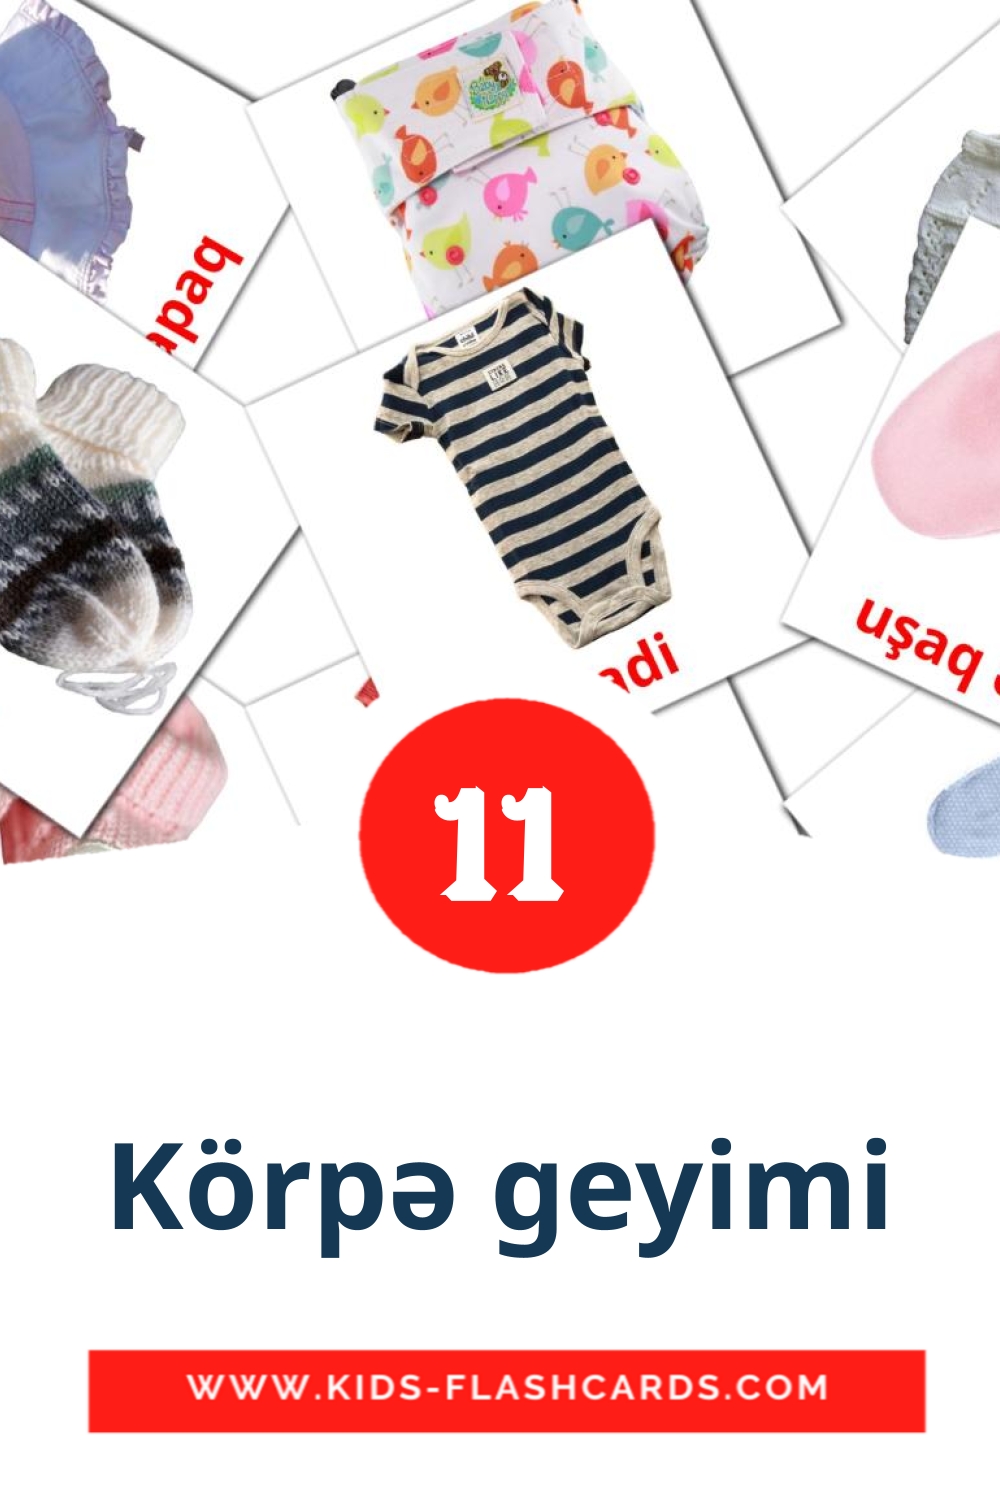 12 Körpə geyimi Picture Cards for Kindergarden in azerbaijani